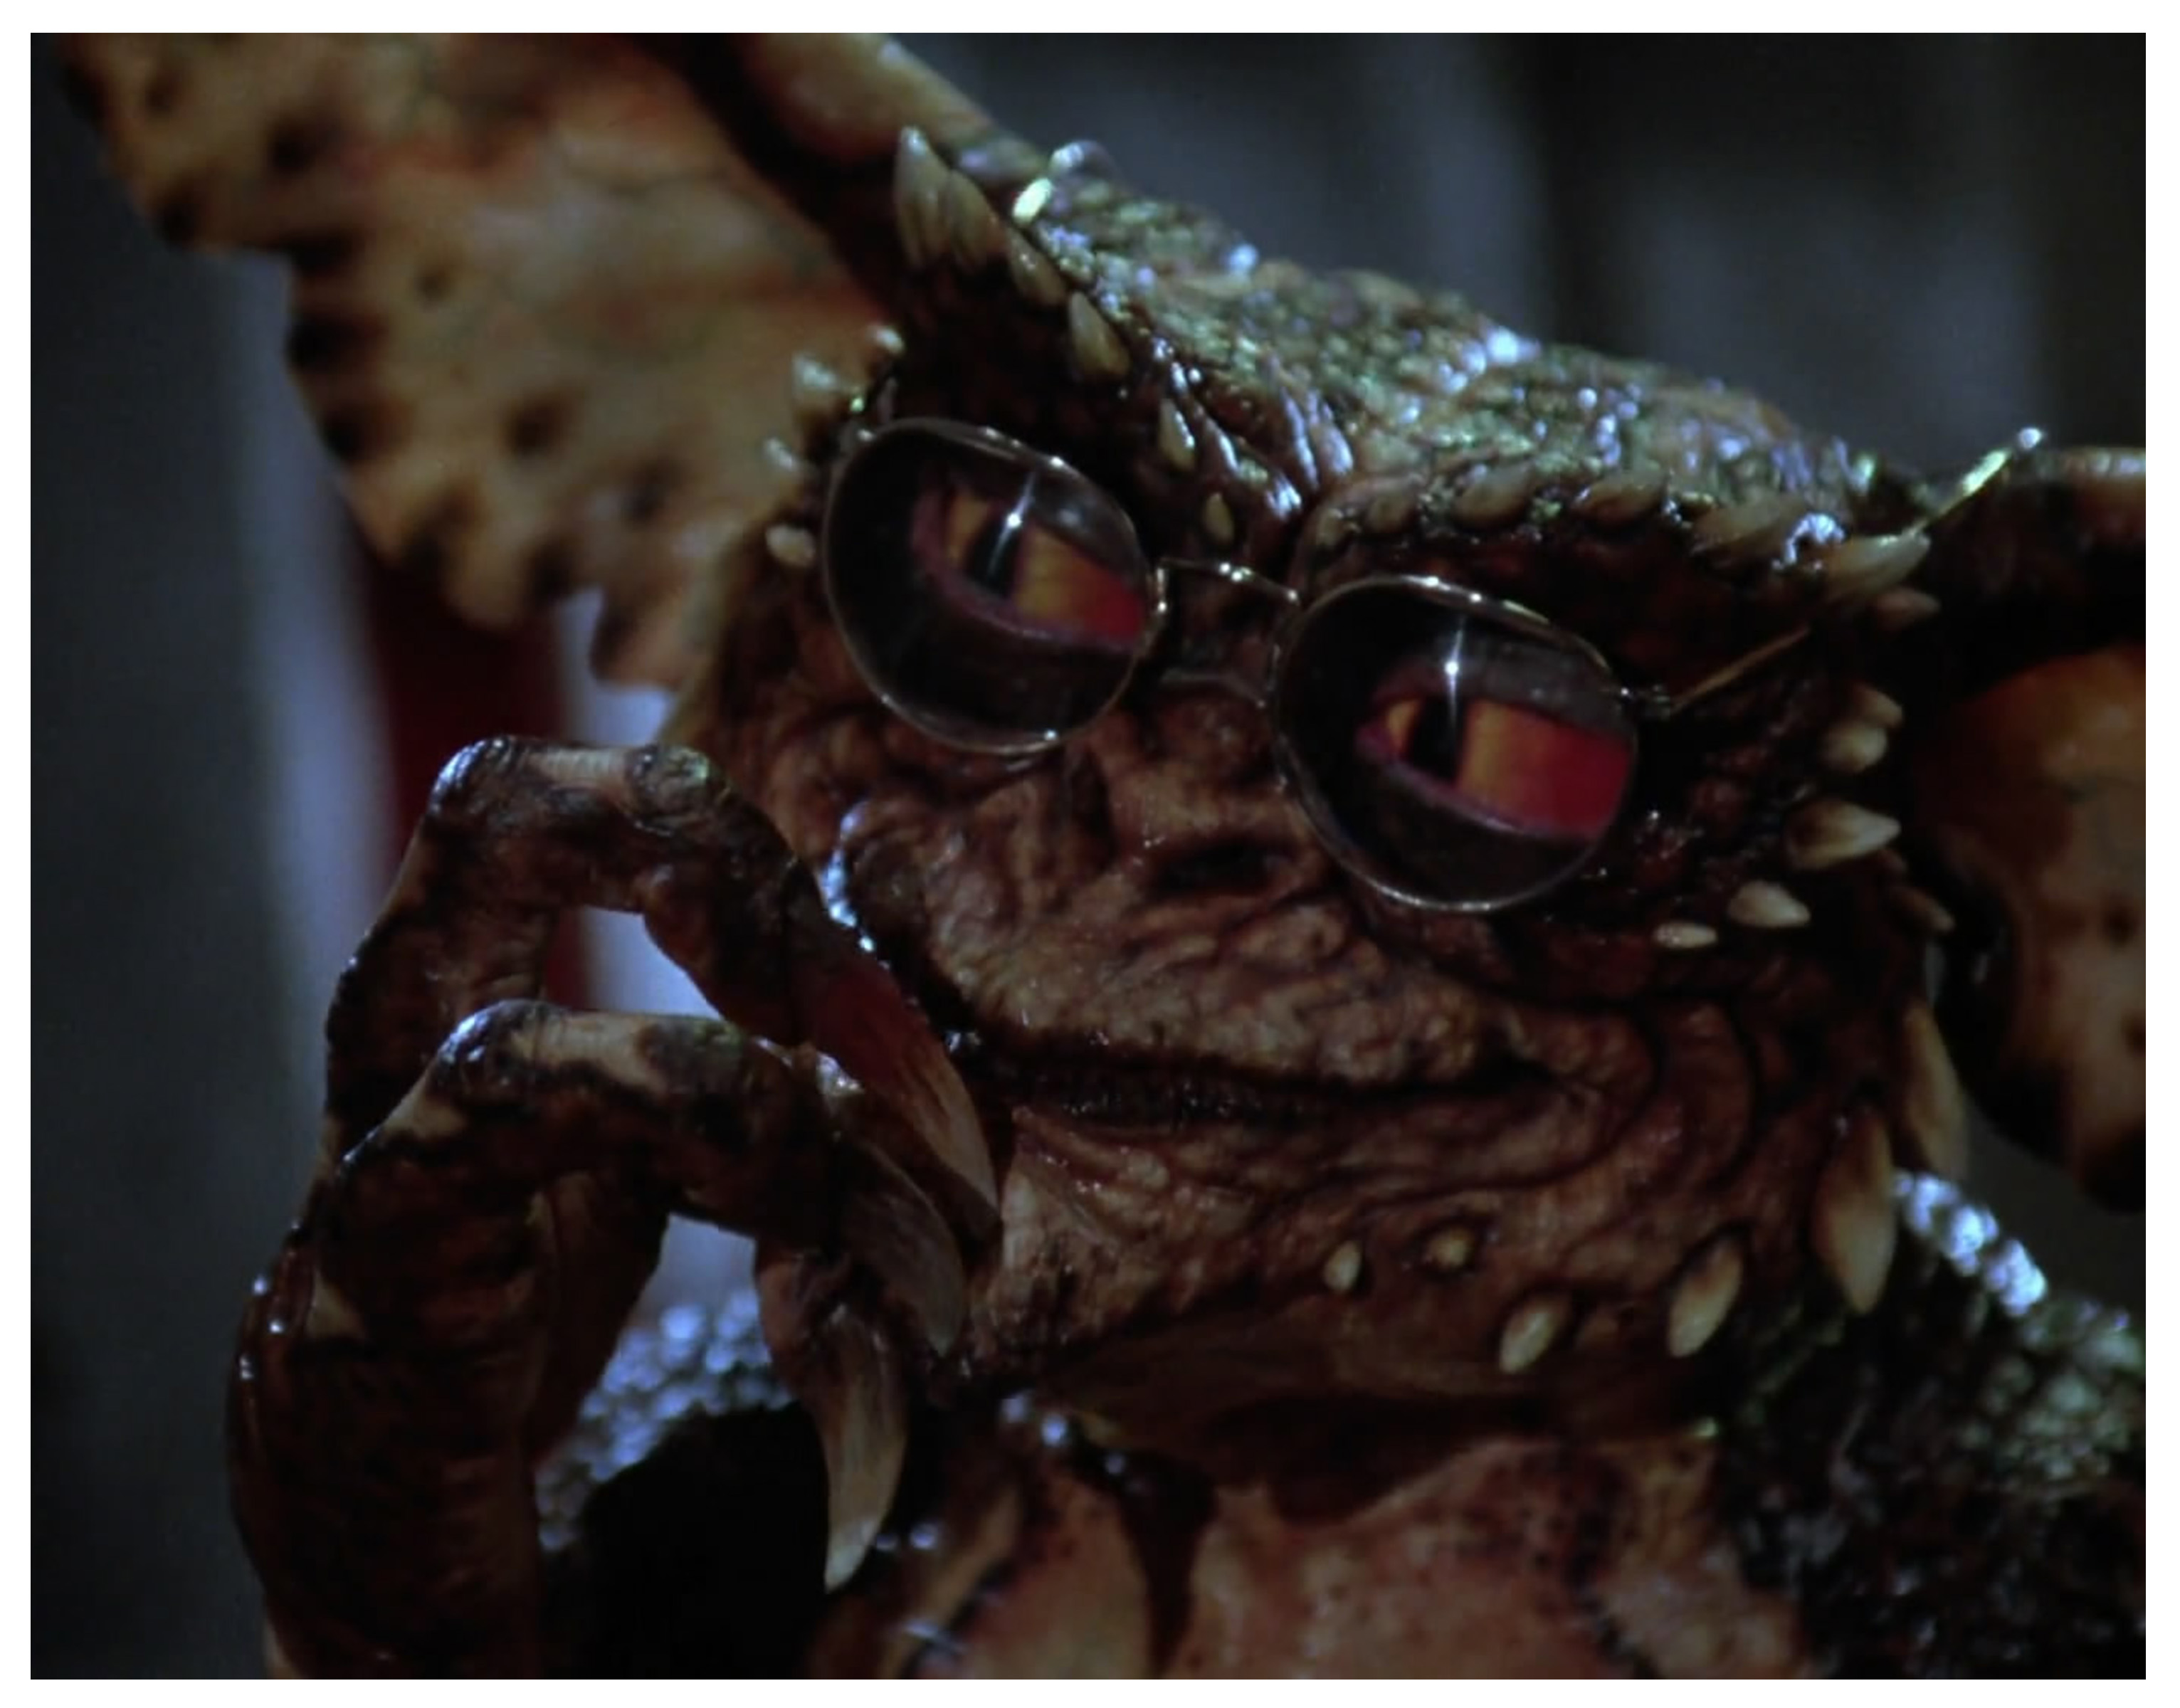 Gremlins 2 (1990) Brain Gremlin. Tim Lawrence: lead puppeteer.